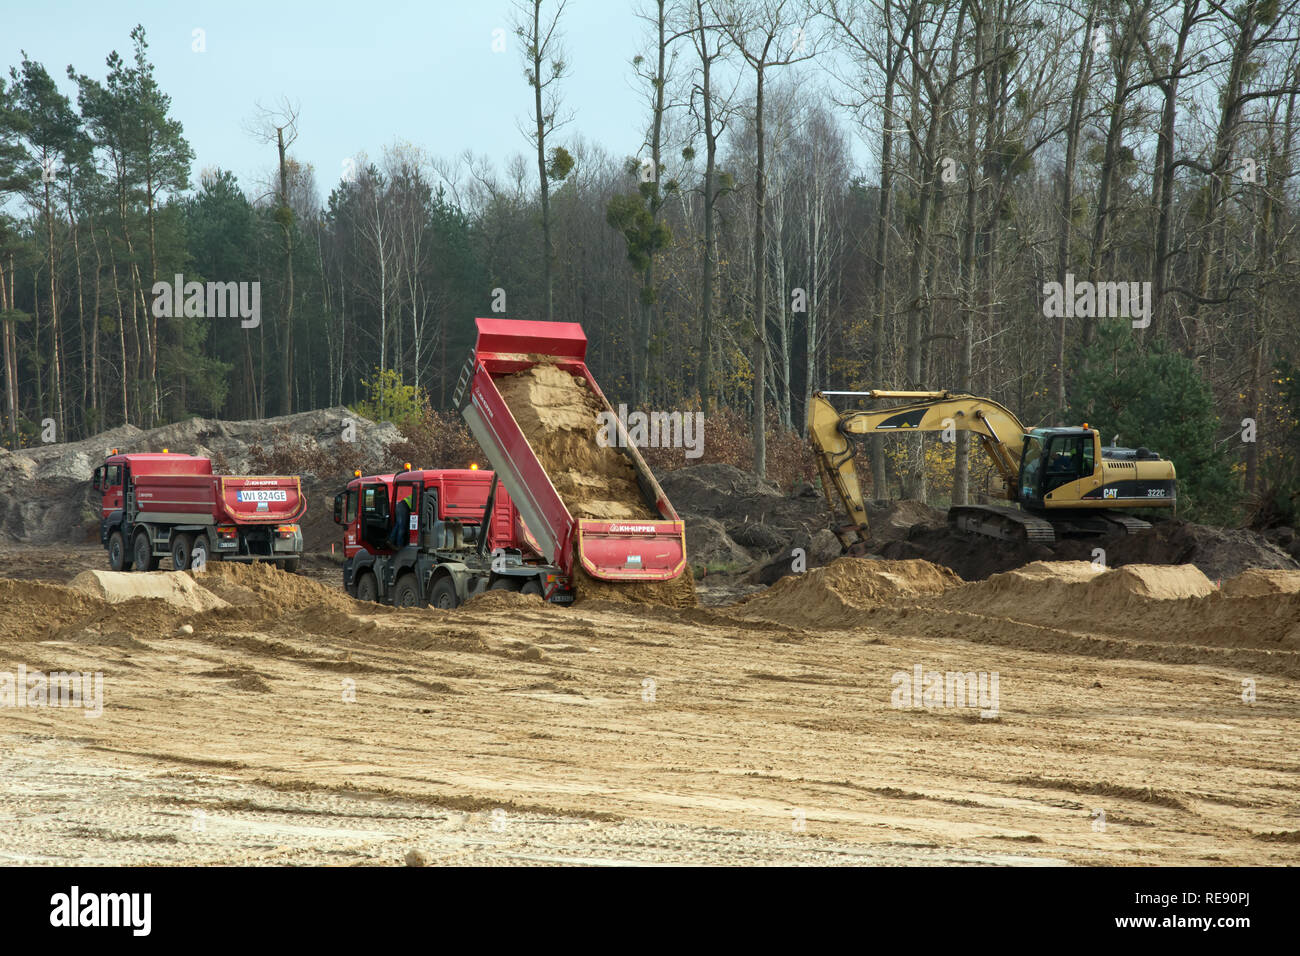 KRUSZYN KRAJENSKI, KUJAWSKO-POMORSKIE/POLAND - NOVEMBER 13, 2017 - S5 construction site with three man kipper dumpers and excavator Stock Photo